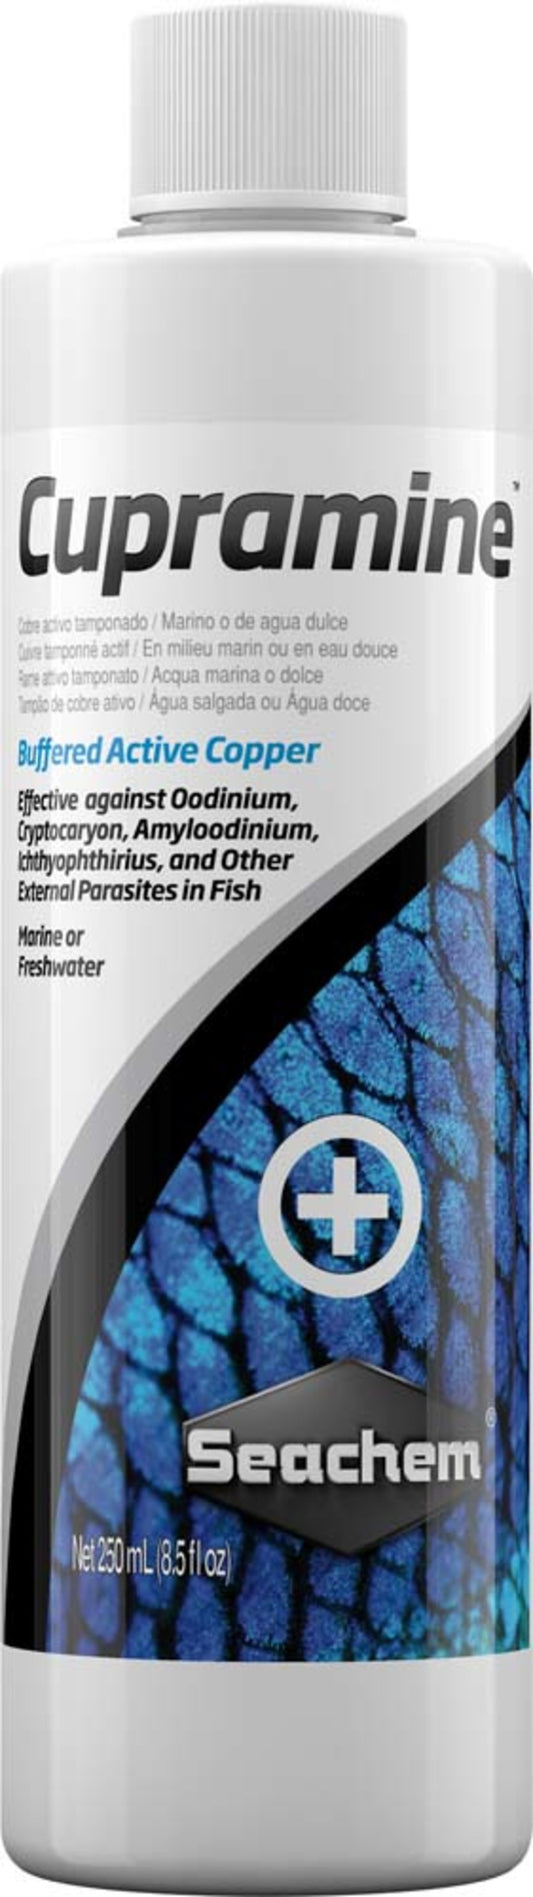 Seachem Laboratories Cupramine Copper Treatment 8.5 fl oz